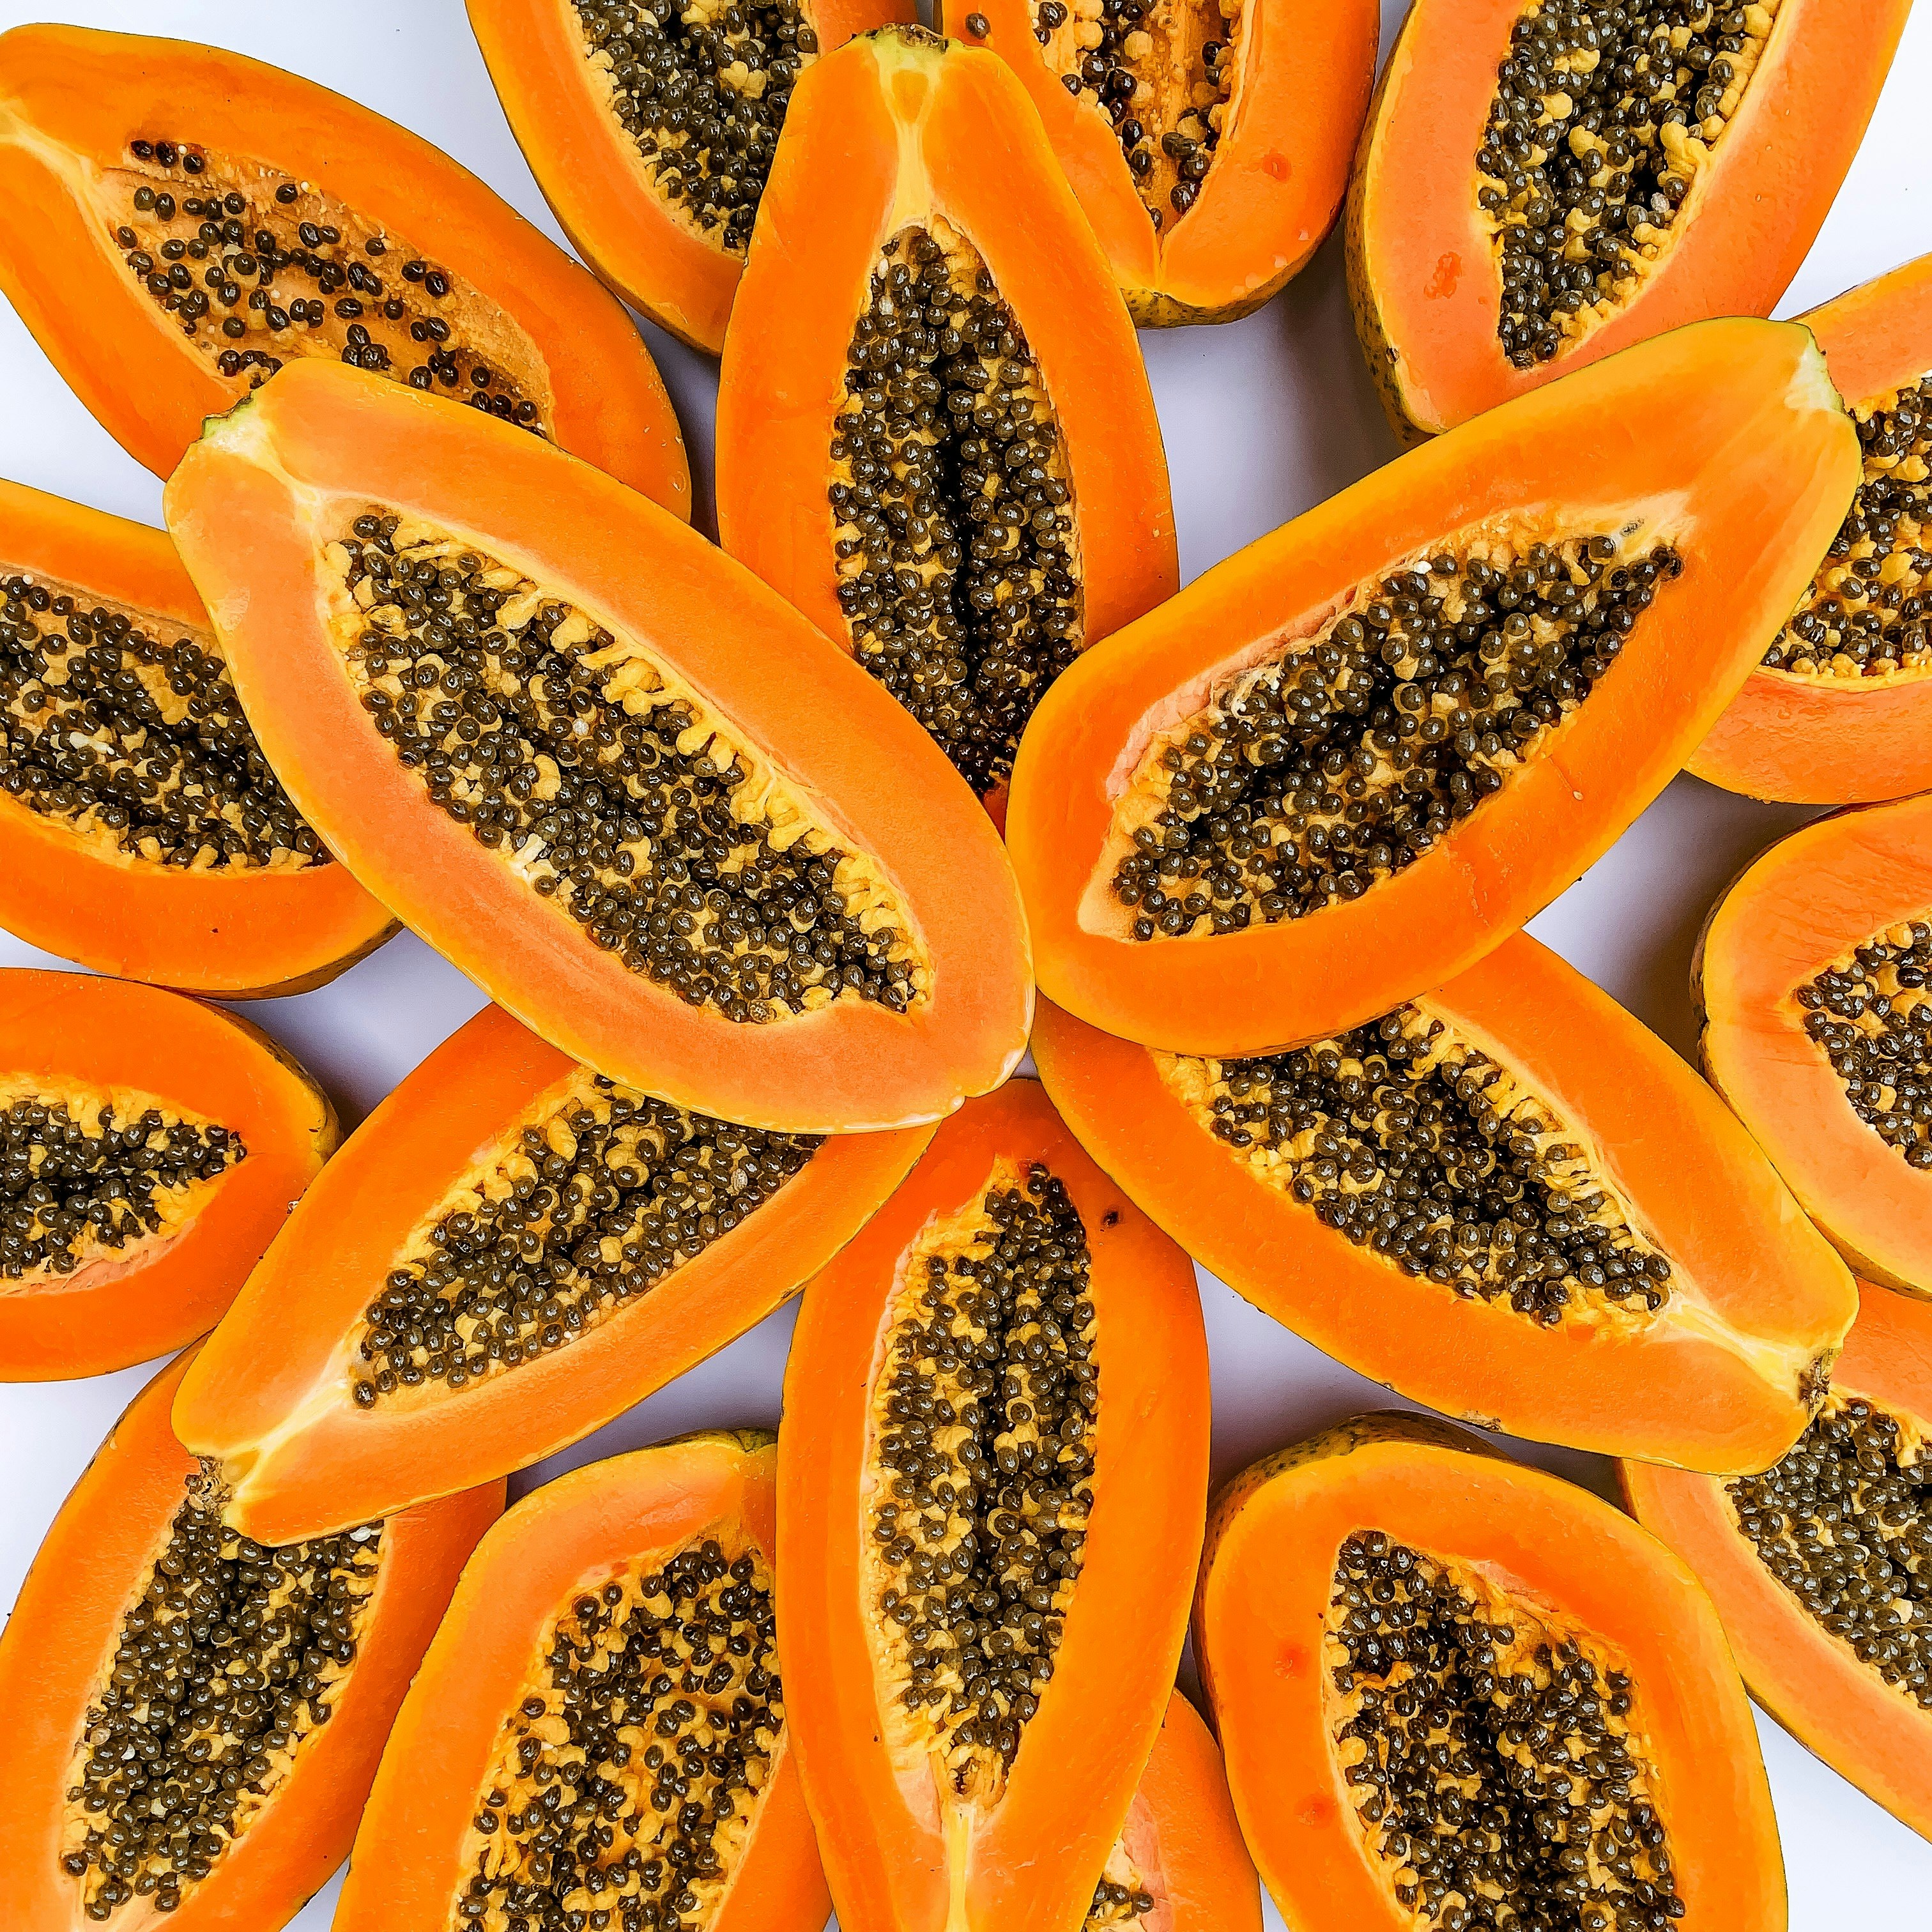 18 Amazing Health Benefits of Papaya (Pawpaw)